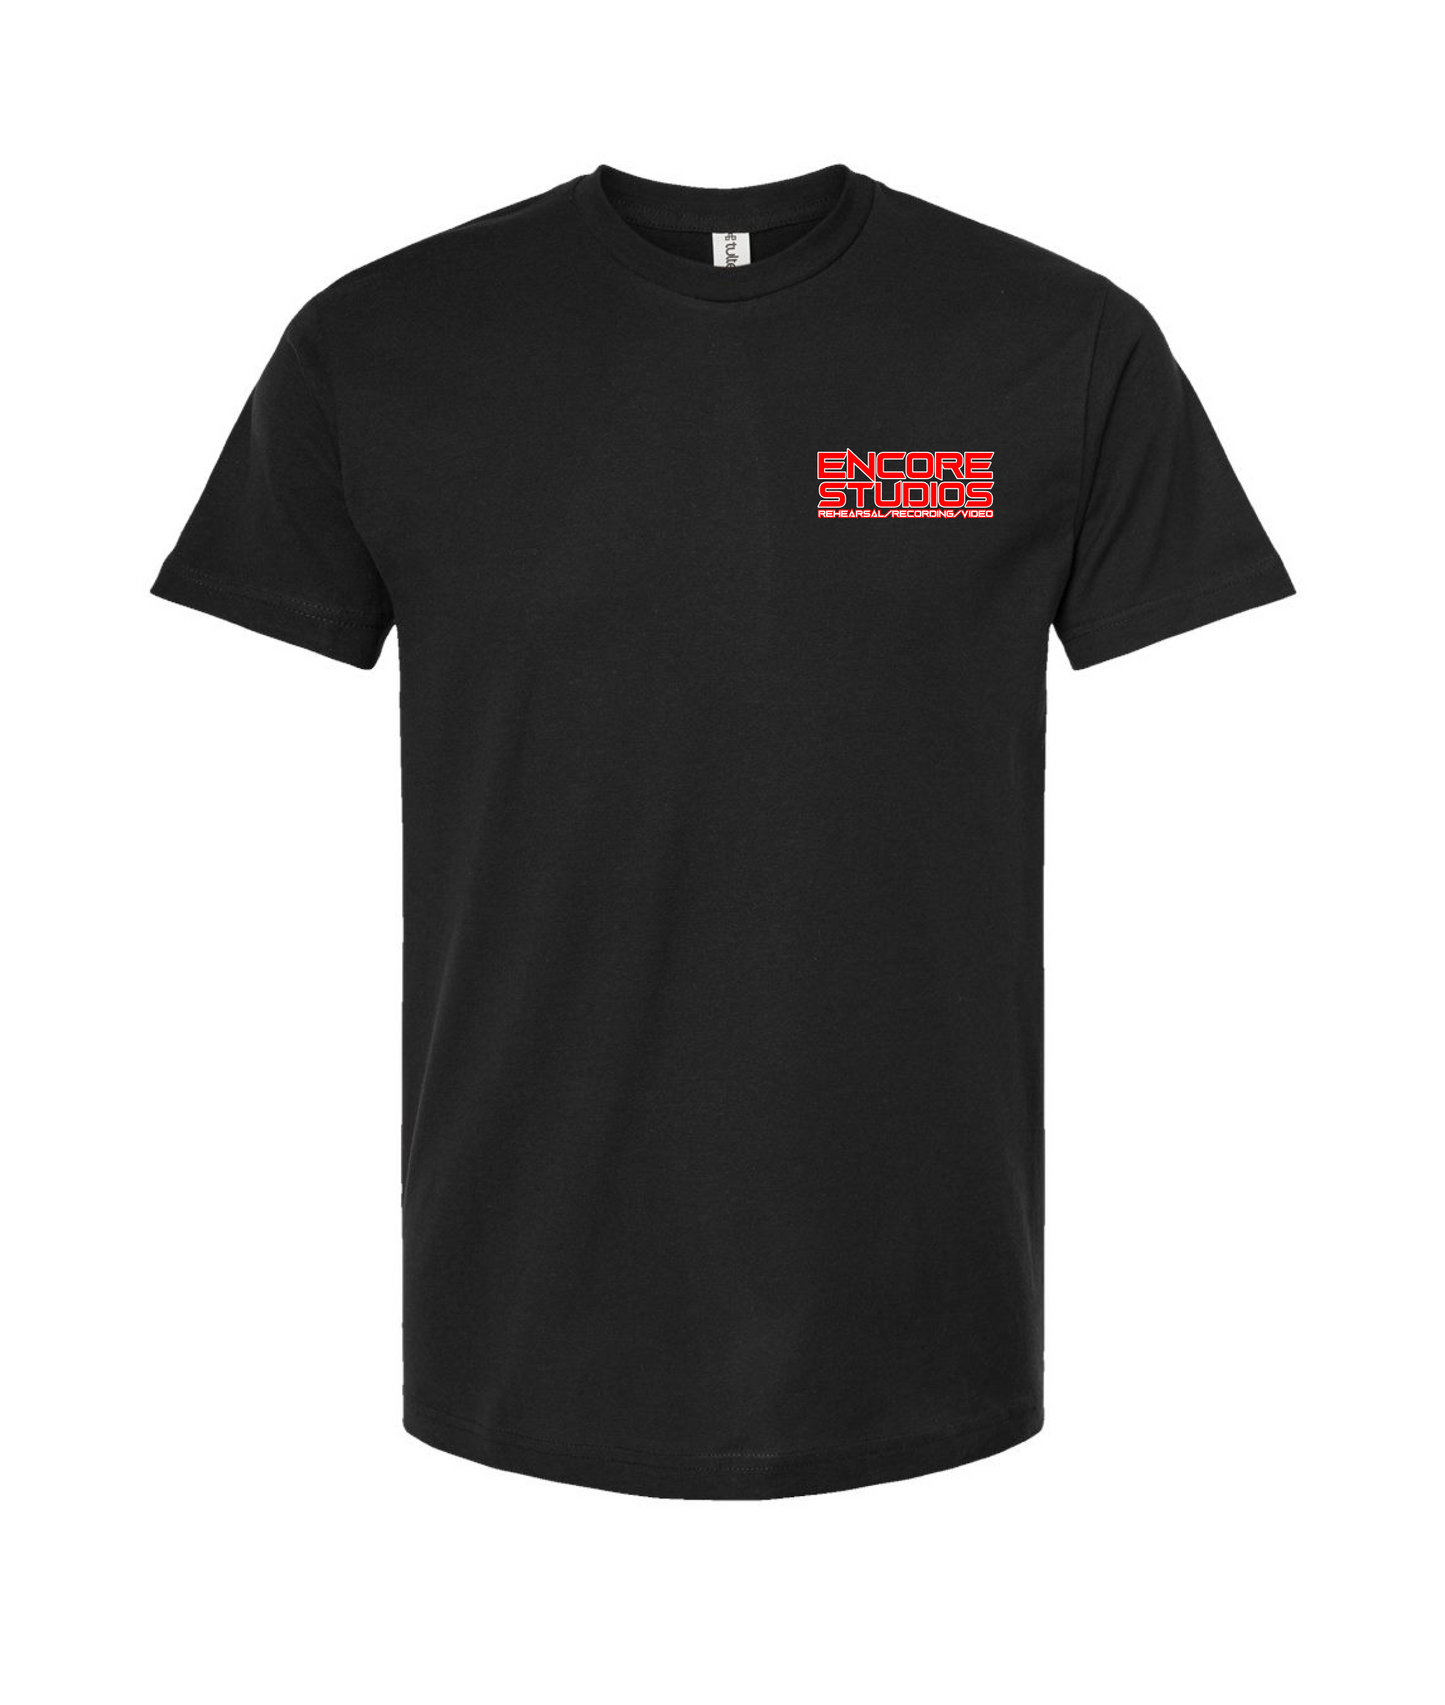 Encore Studios - Logo - Black T-Shirt